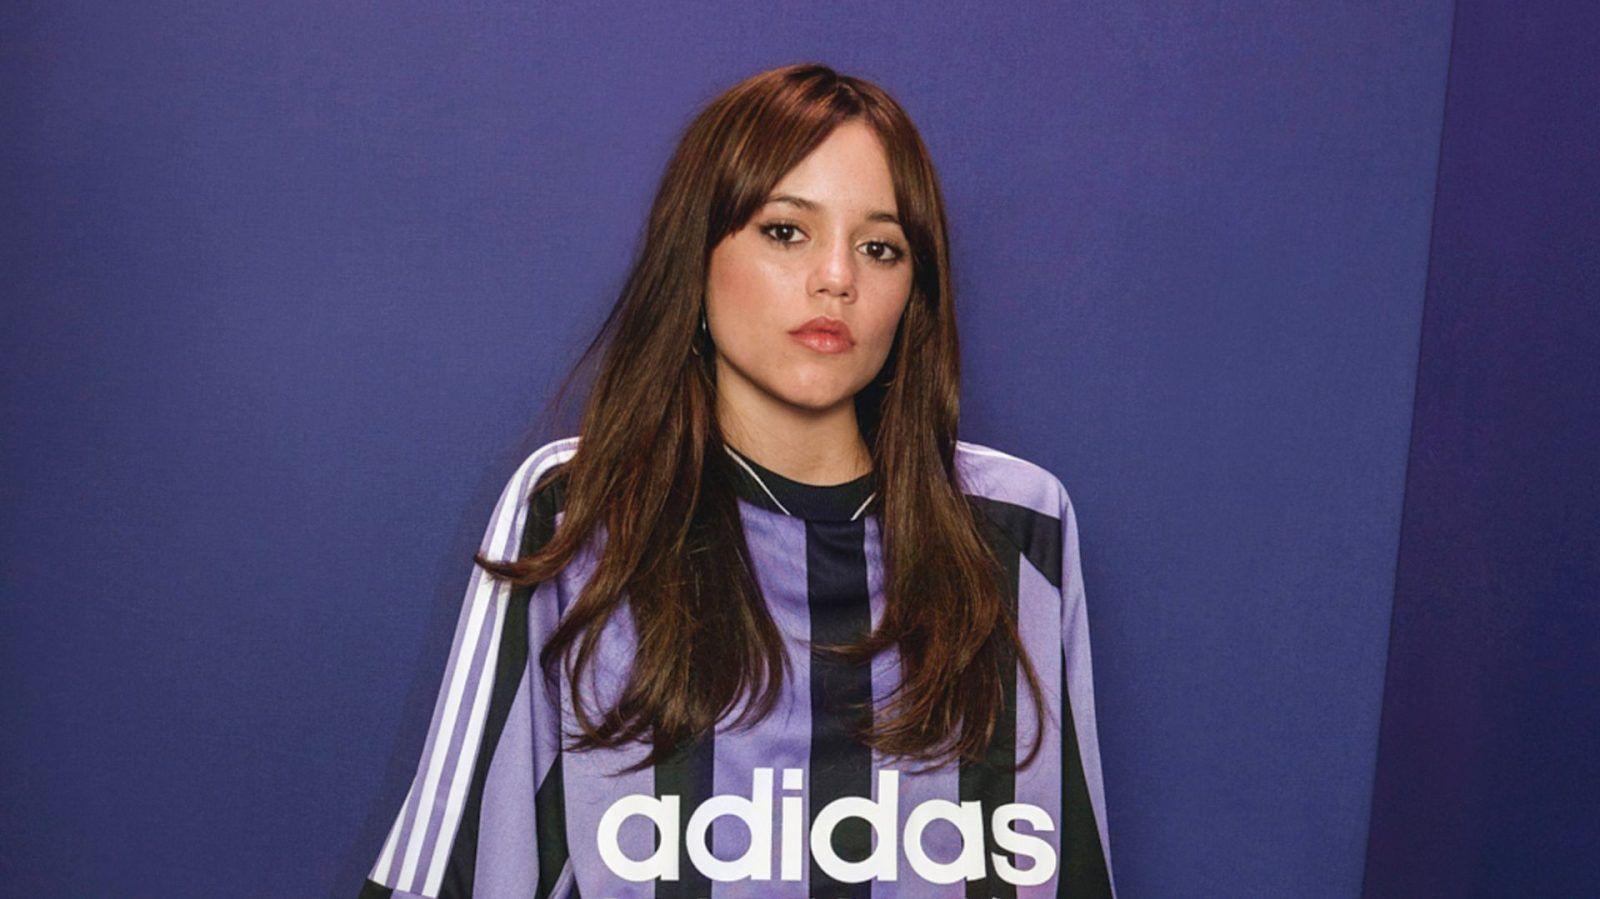 Adidas To Launch New Label Makes Jenna Ortega The Brand Ambassador